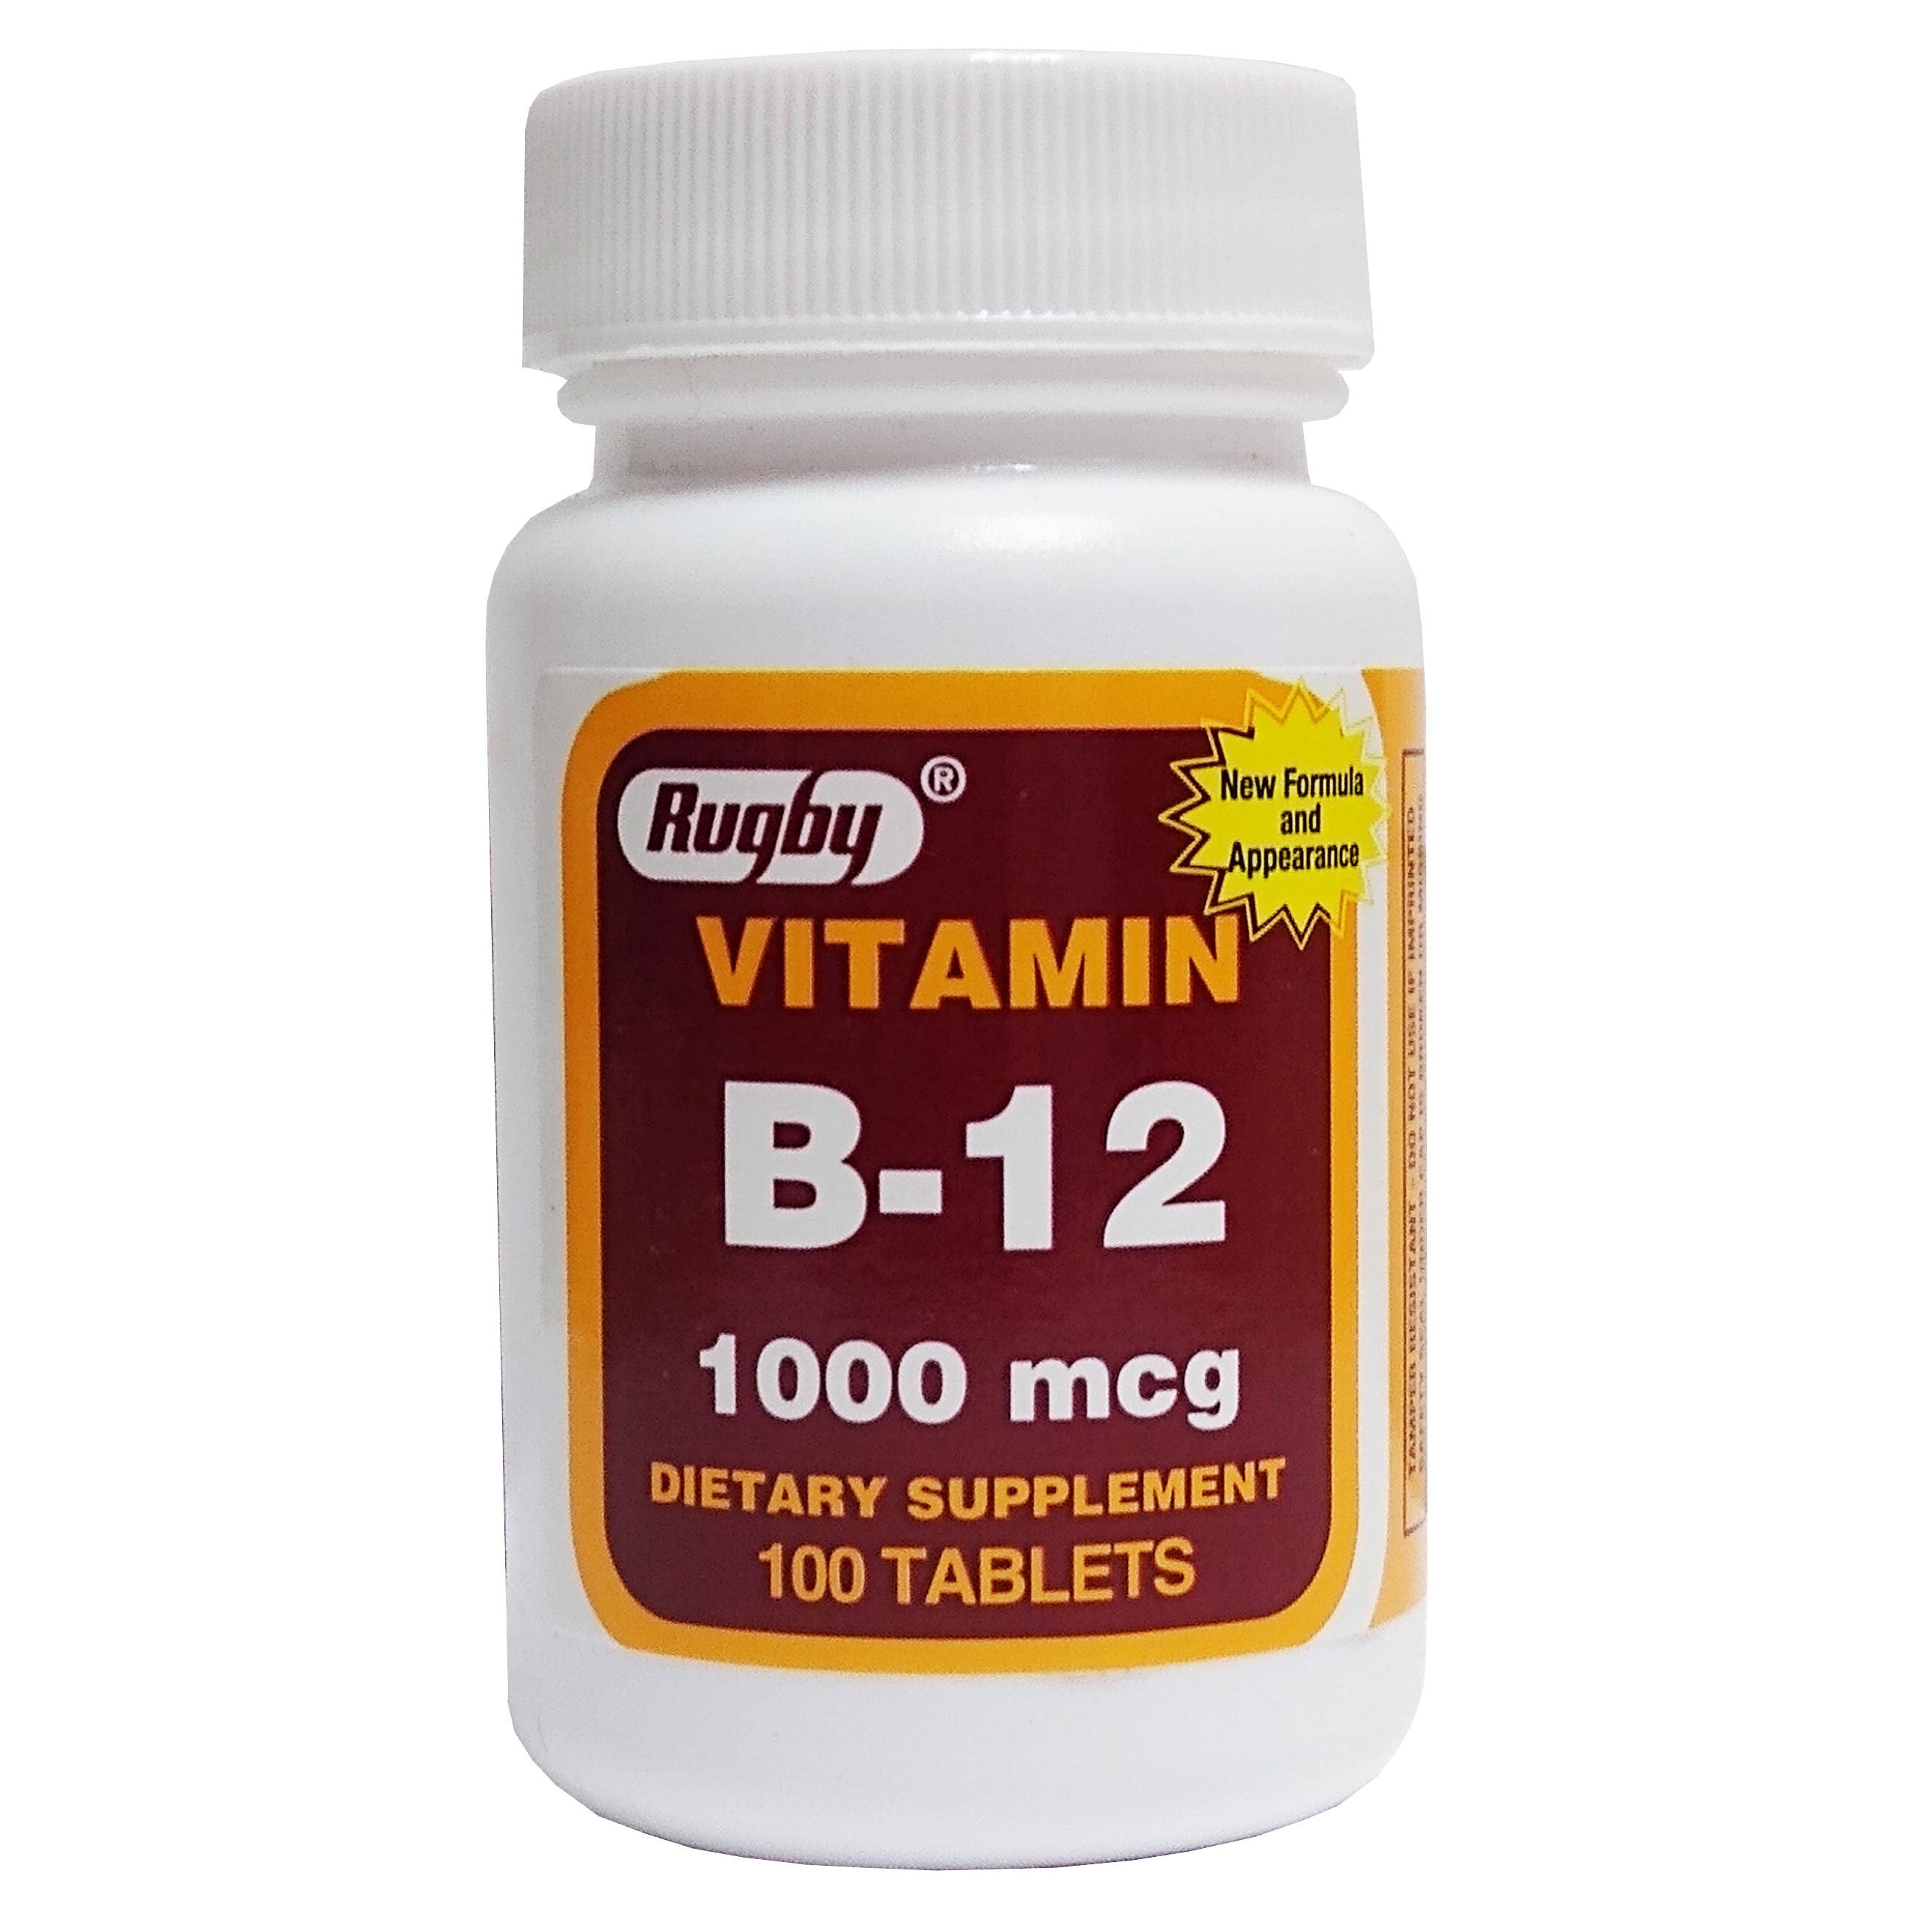 Rugby Vitamin B-12